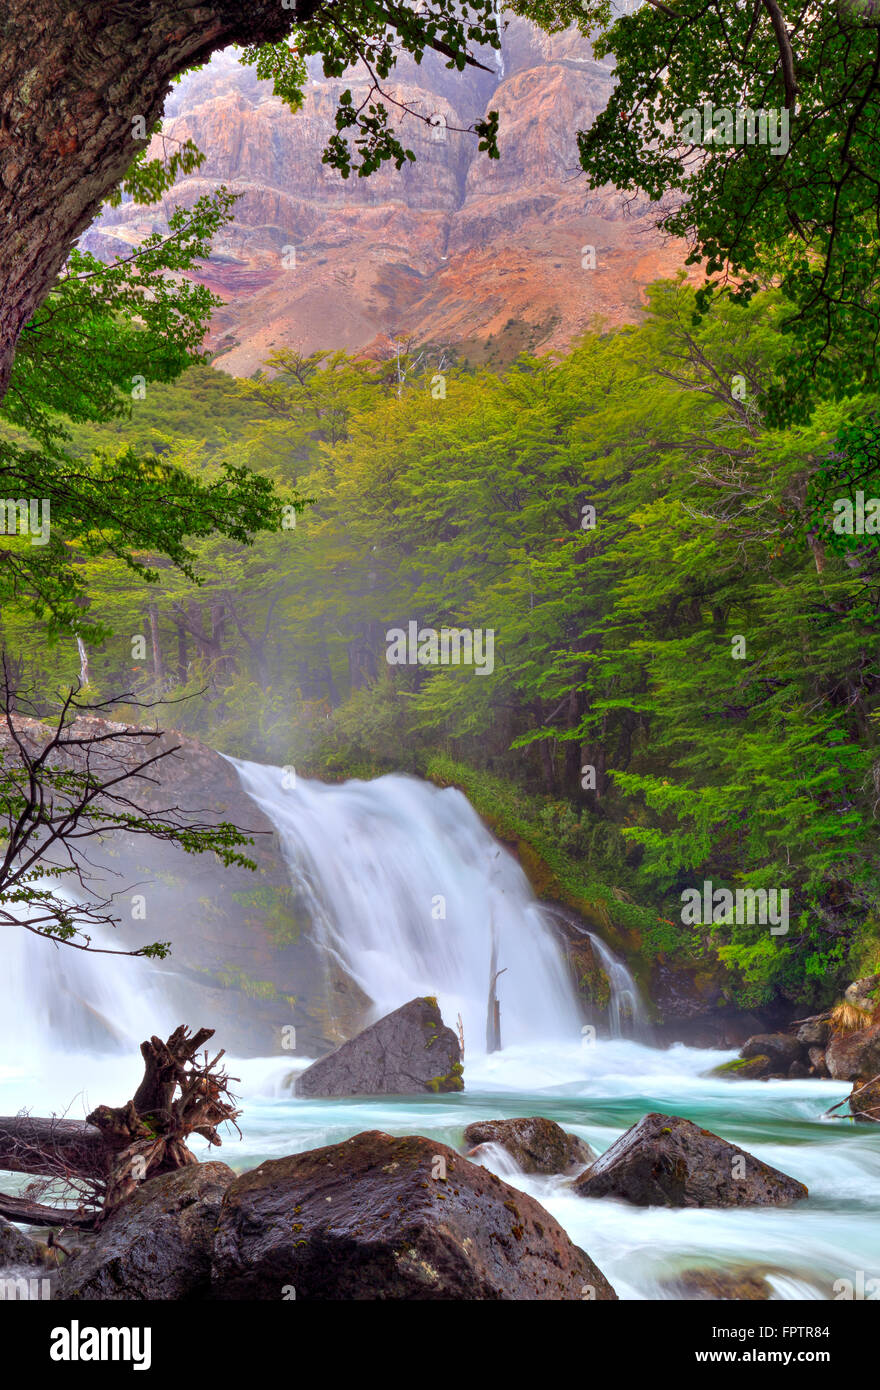 River and waterfall at El Chalten surrounduings. Santa Cruz Argentina. Stock Photo